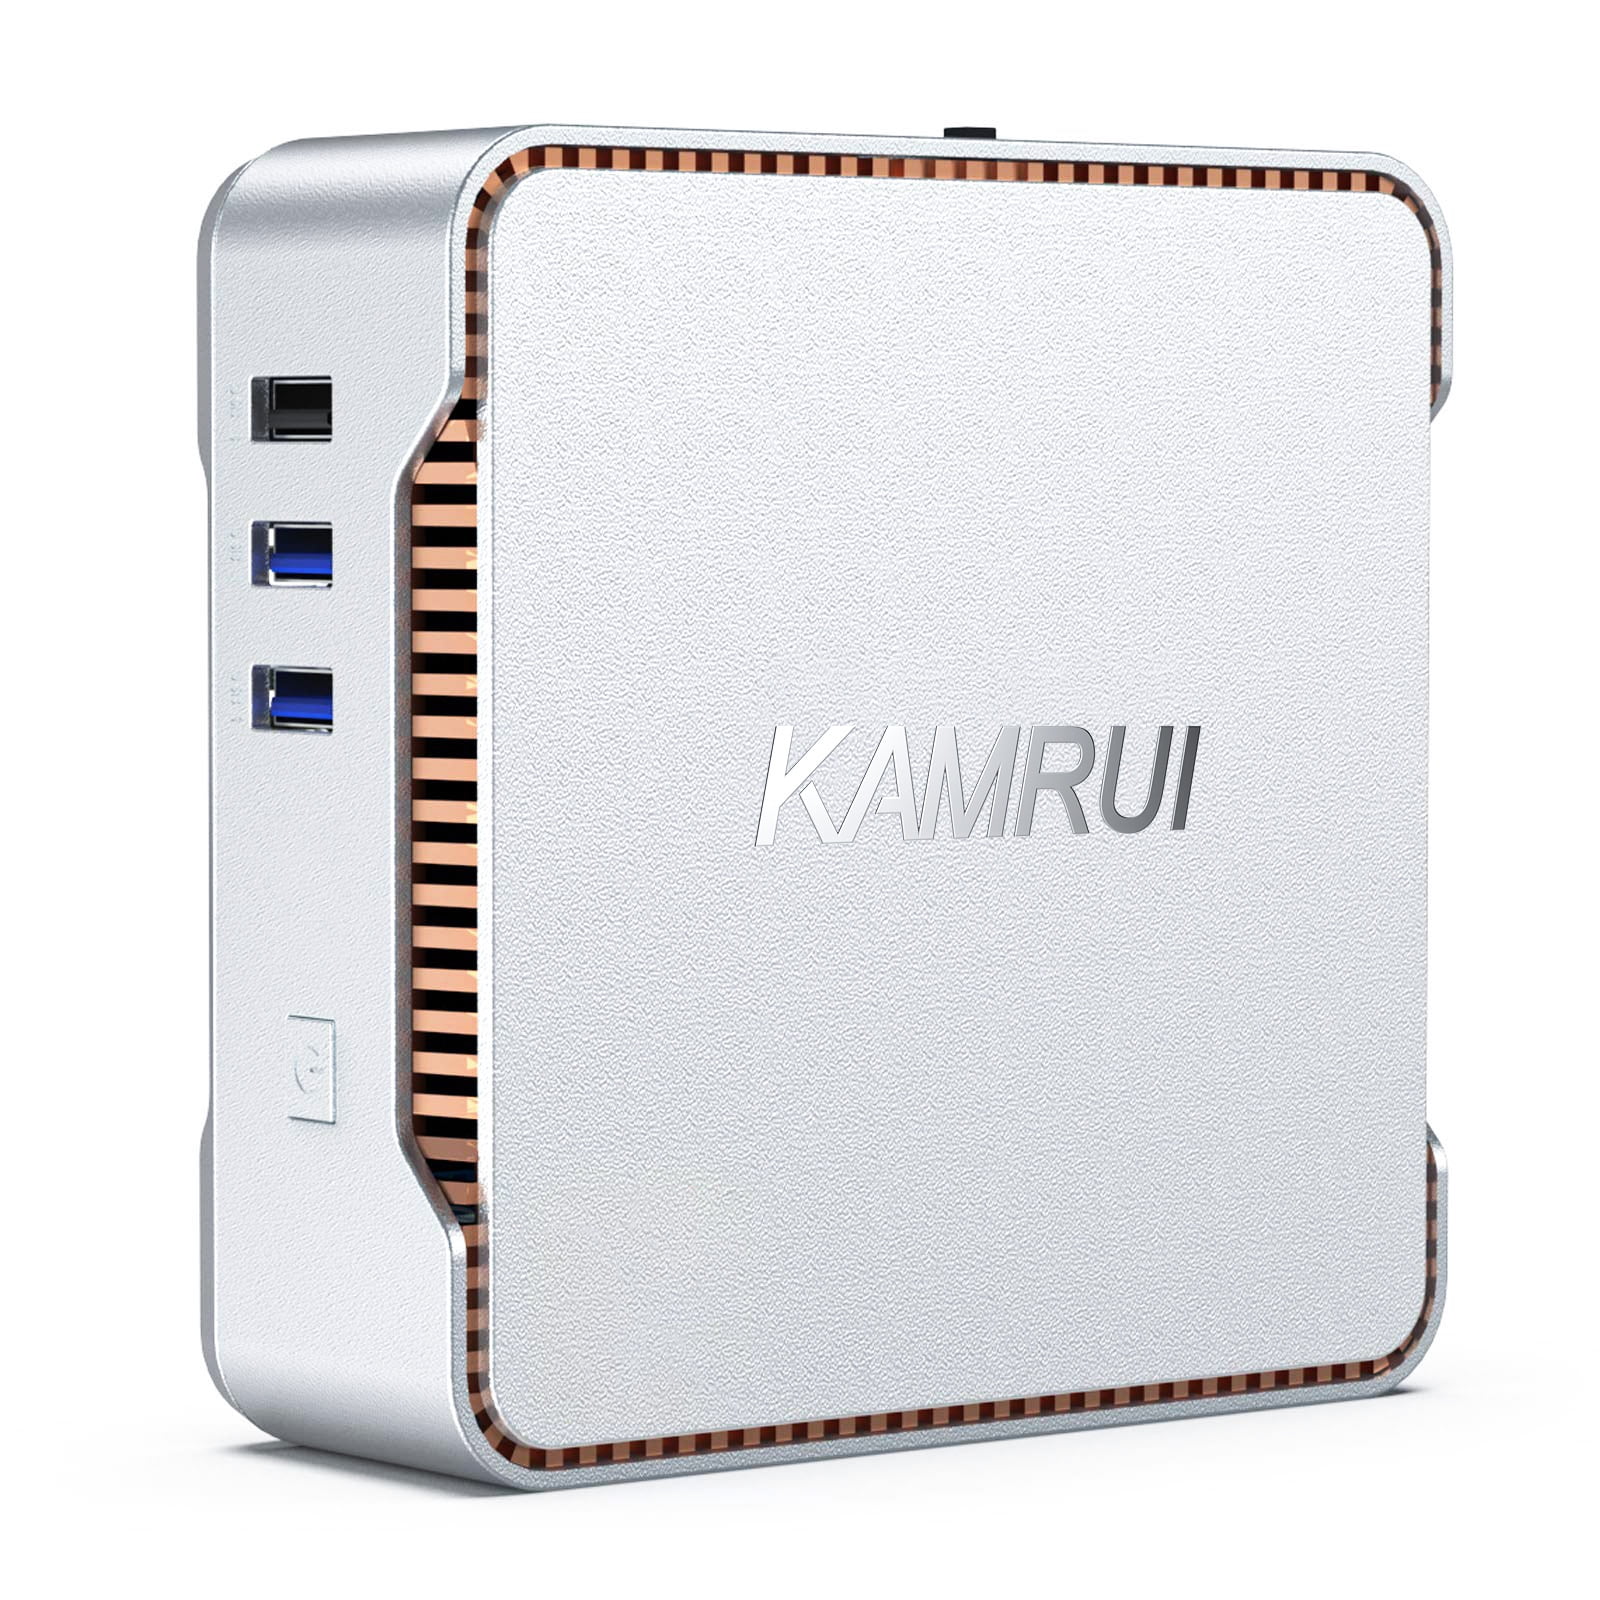 Buy Kamrui Mini PC Intel Celeron 2.7GHz Desktop Computer 12GB RAM 128GB